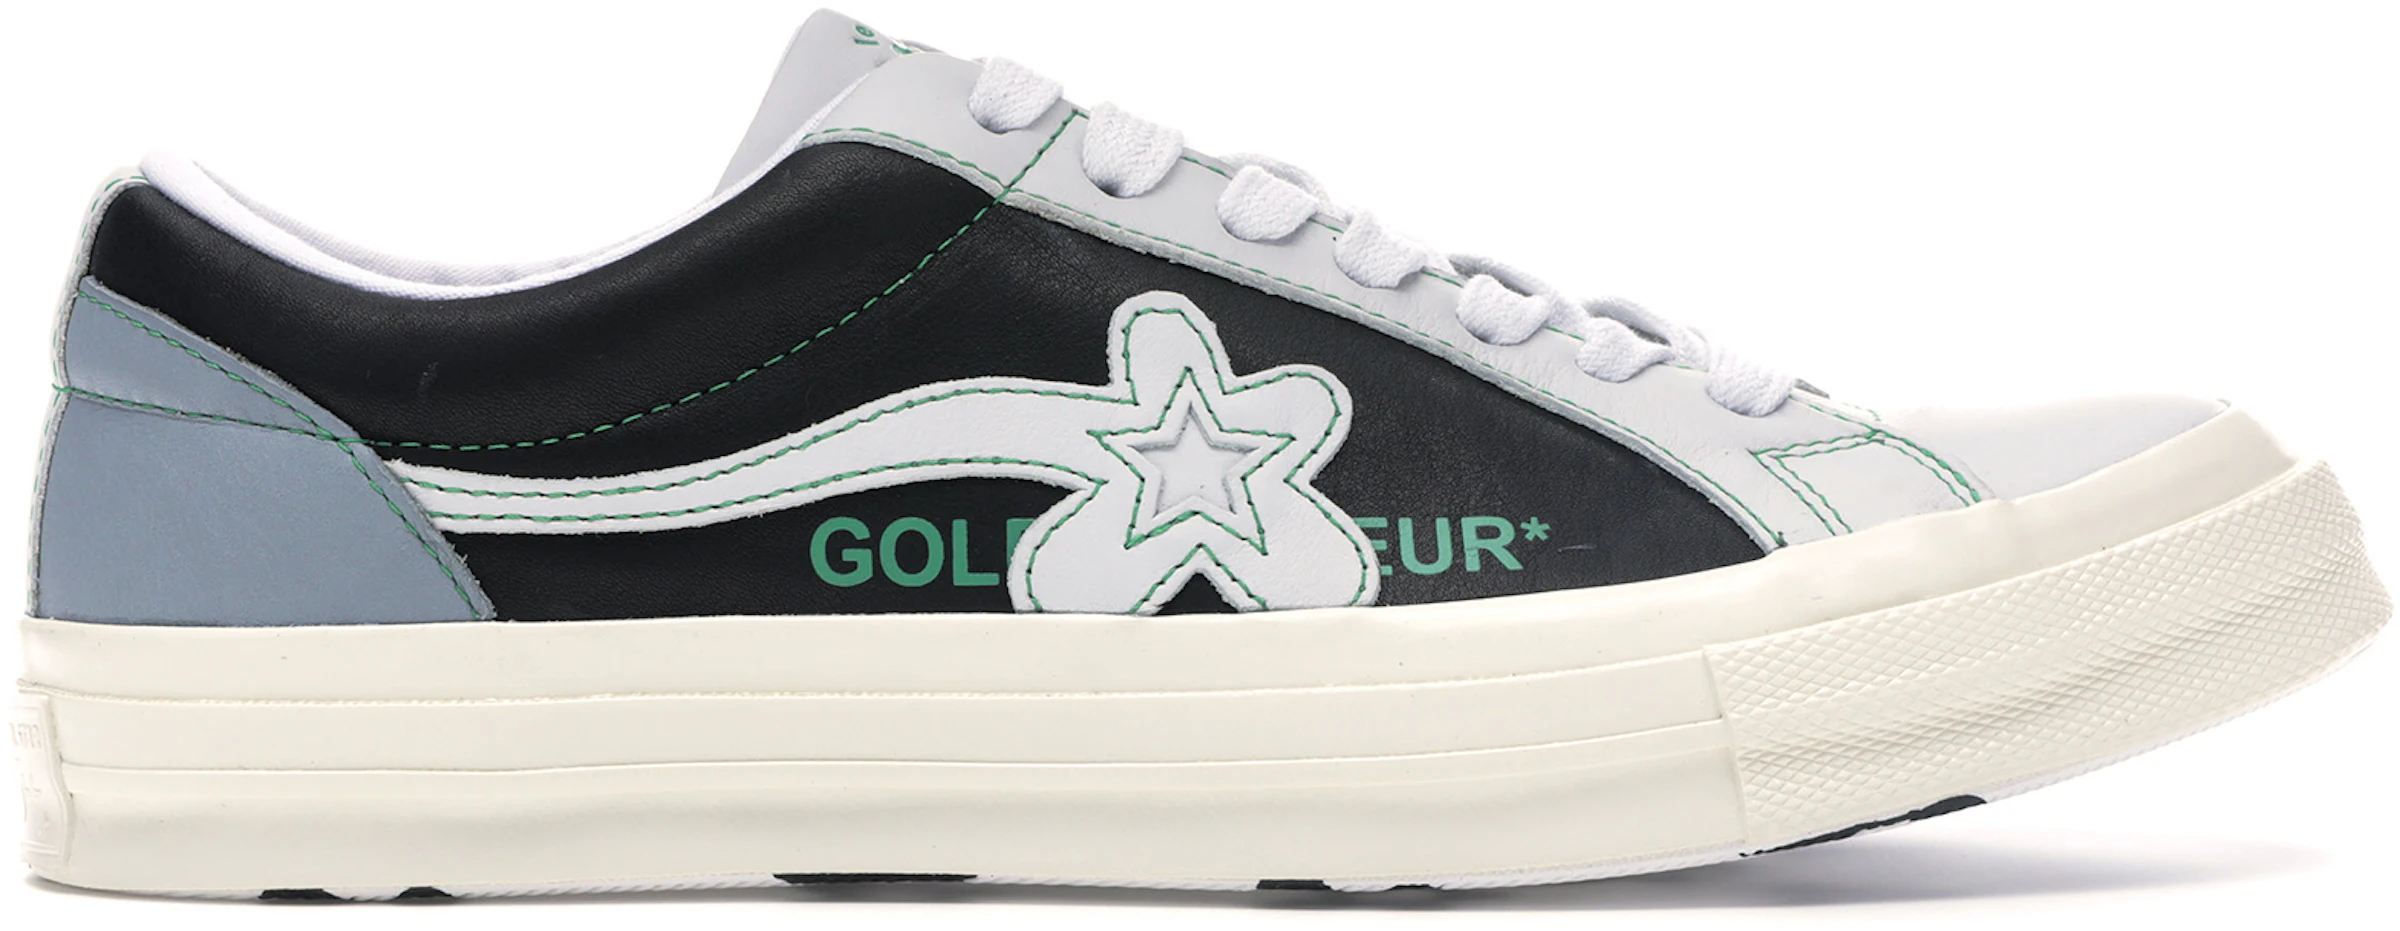 Converse One Star Ox Golf Le Fleur Industrial Pack Black - 164023C -